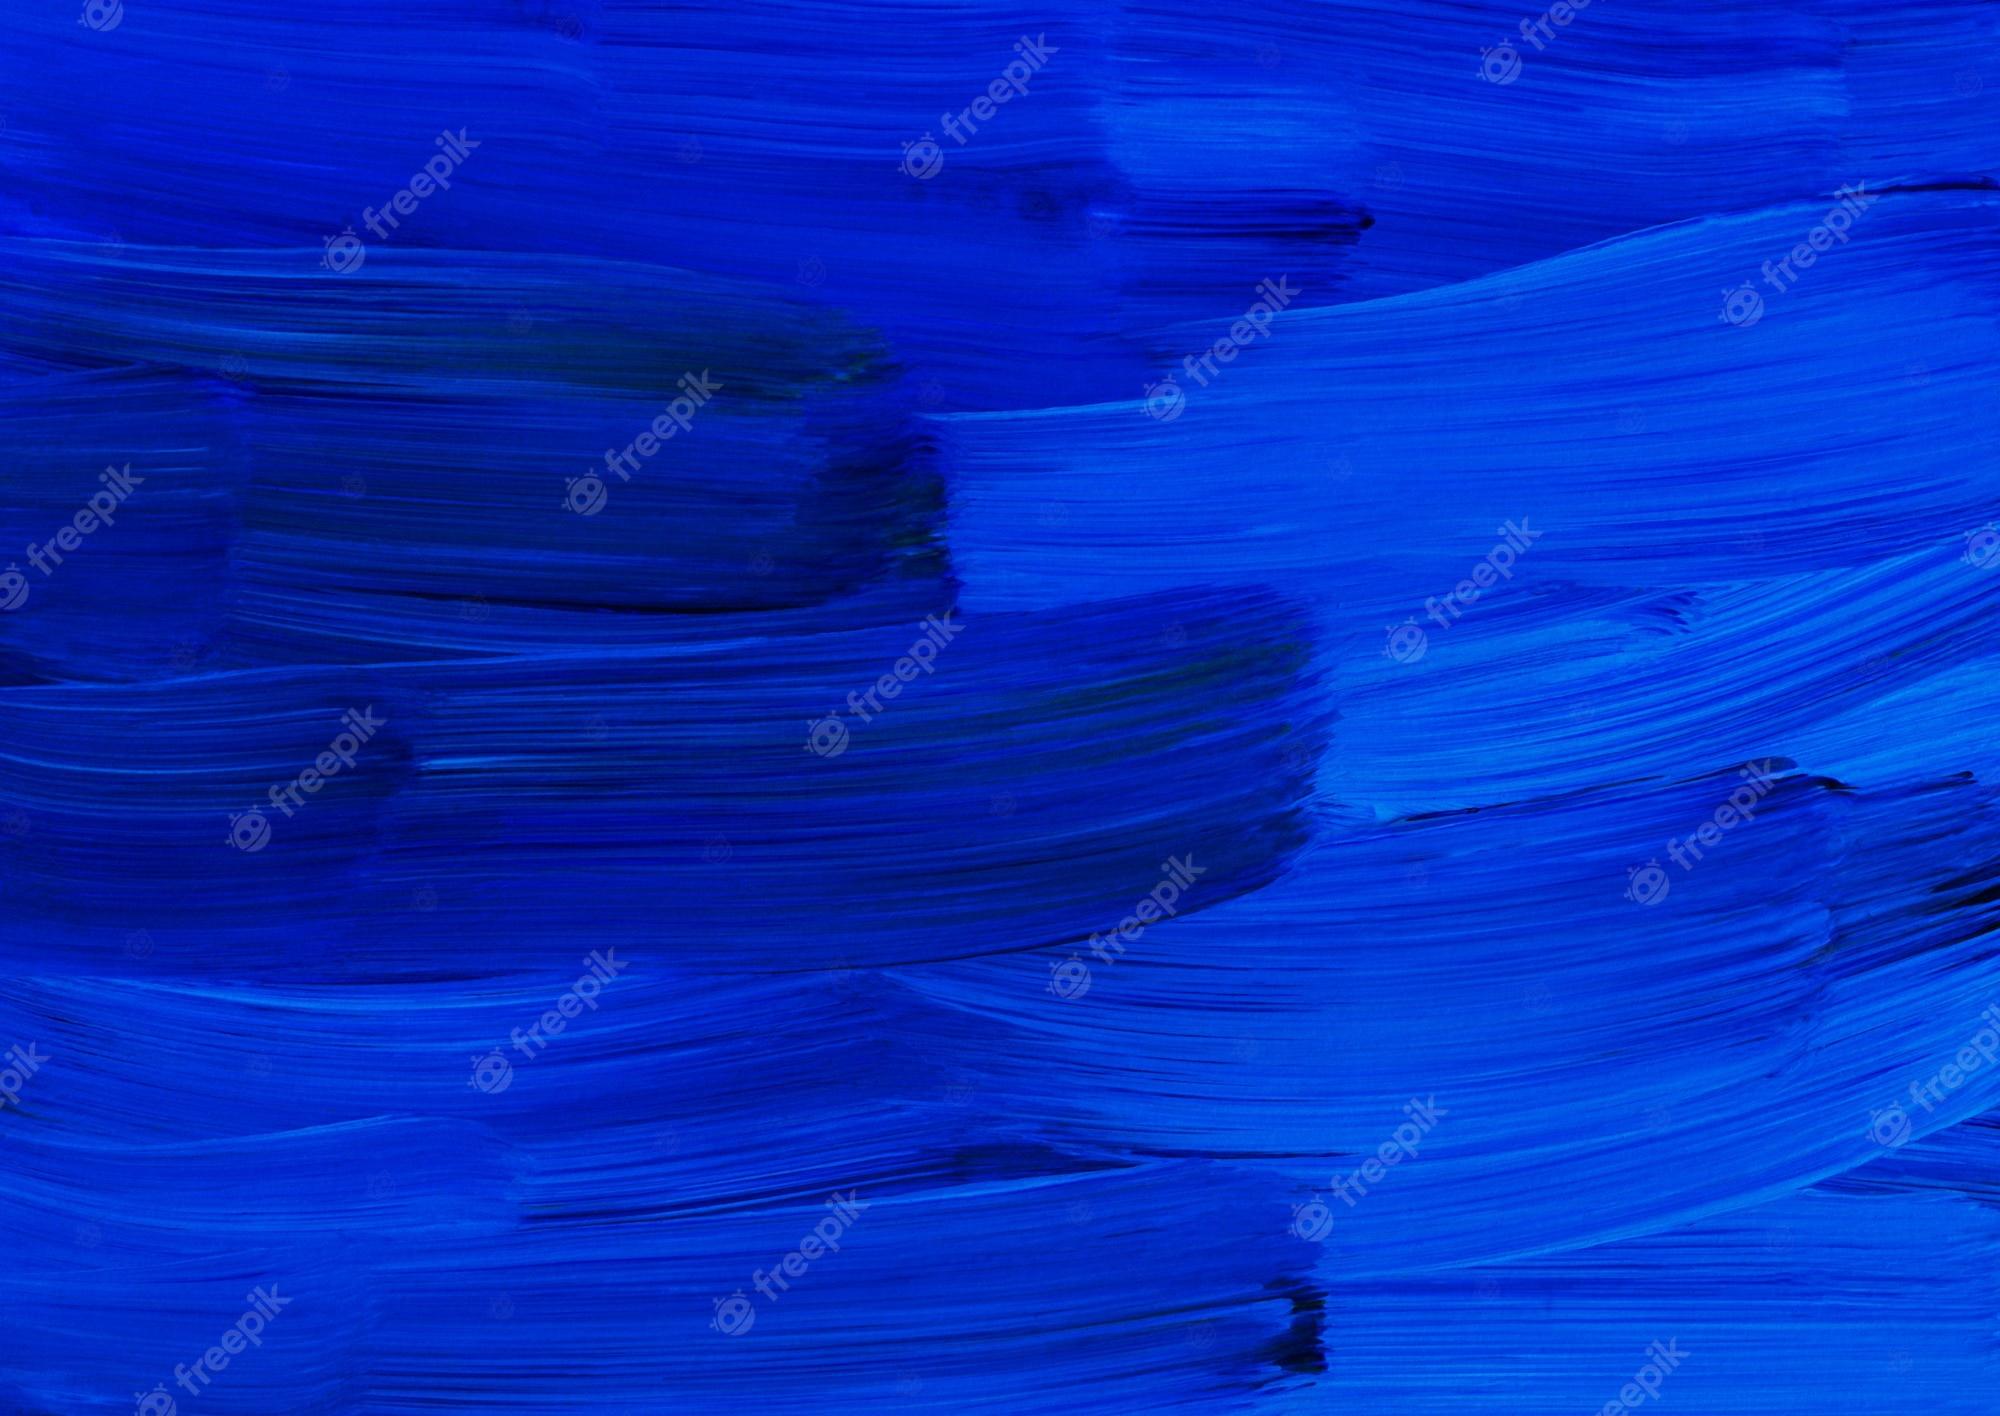 Wallpaper Cobalt Blue Colorfulness Blue Purple Azure Background   Download Free Image